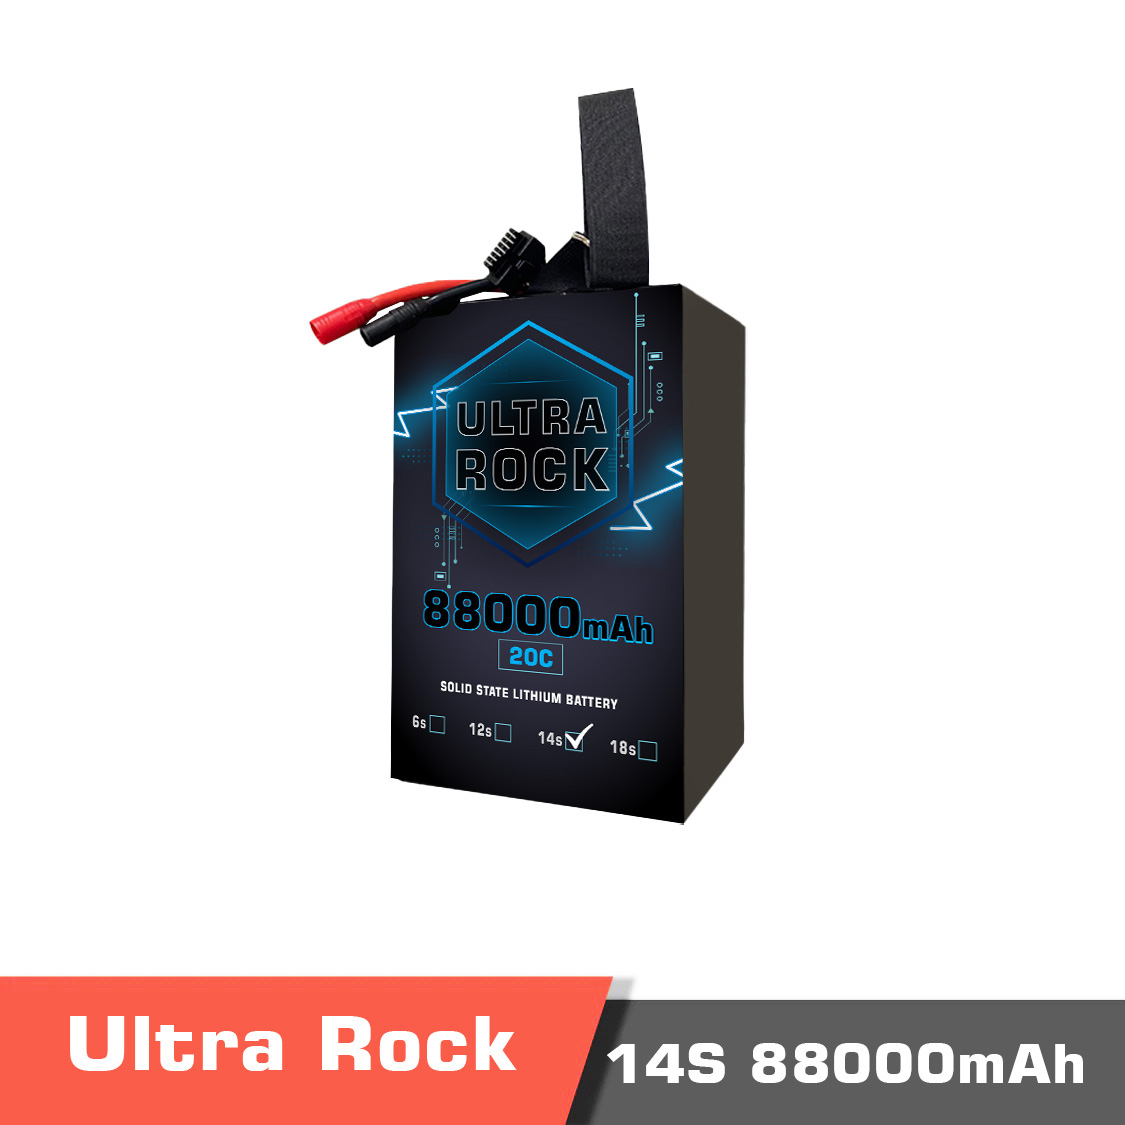 88000 14s temp - Ultra Rock Ultra HV Semi Solid-State Battery,Ultra HV Semi Solid-State Battery,6S 44000mAh high voltage LiPo Battery,6S 44000mAh HV LiPo Battery,Solid-state LiPo battery,lipo battery,drone battery,6s battery,high energy density battery,UAV,drone,vtol - MotioNew - 1